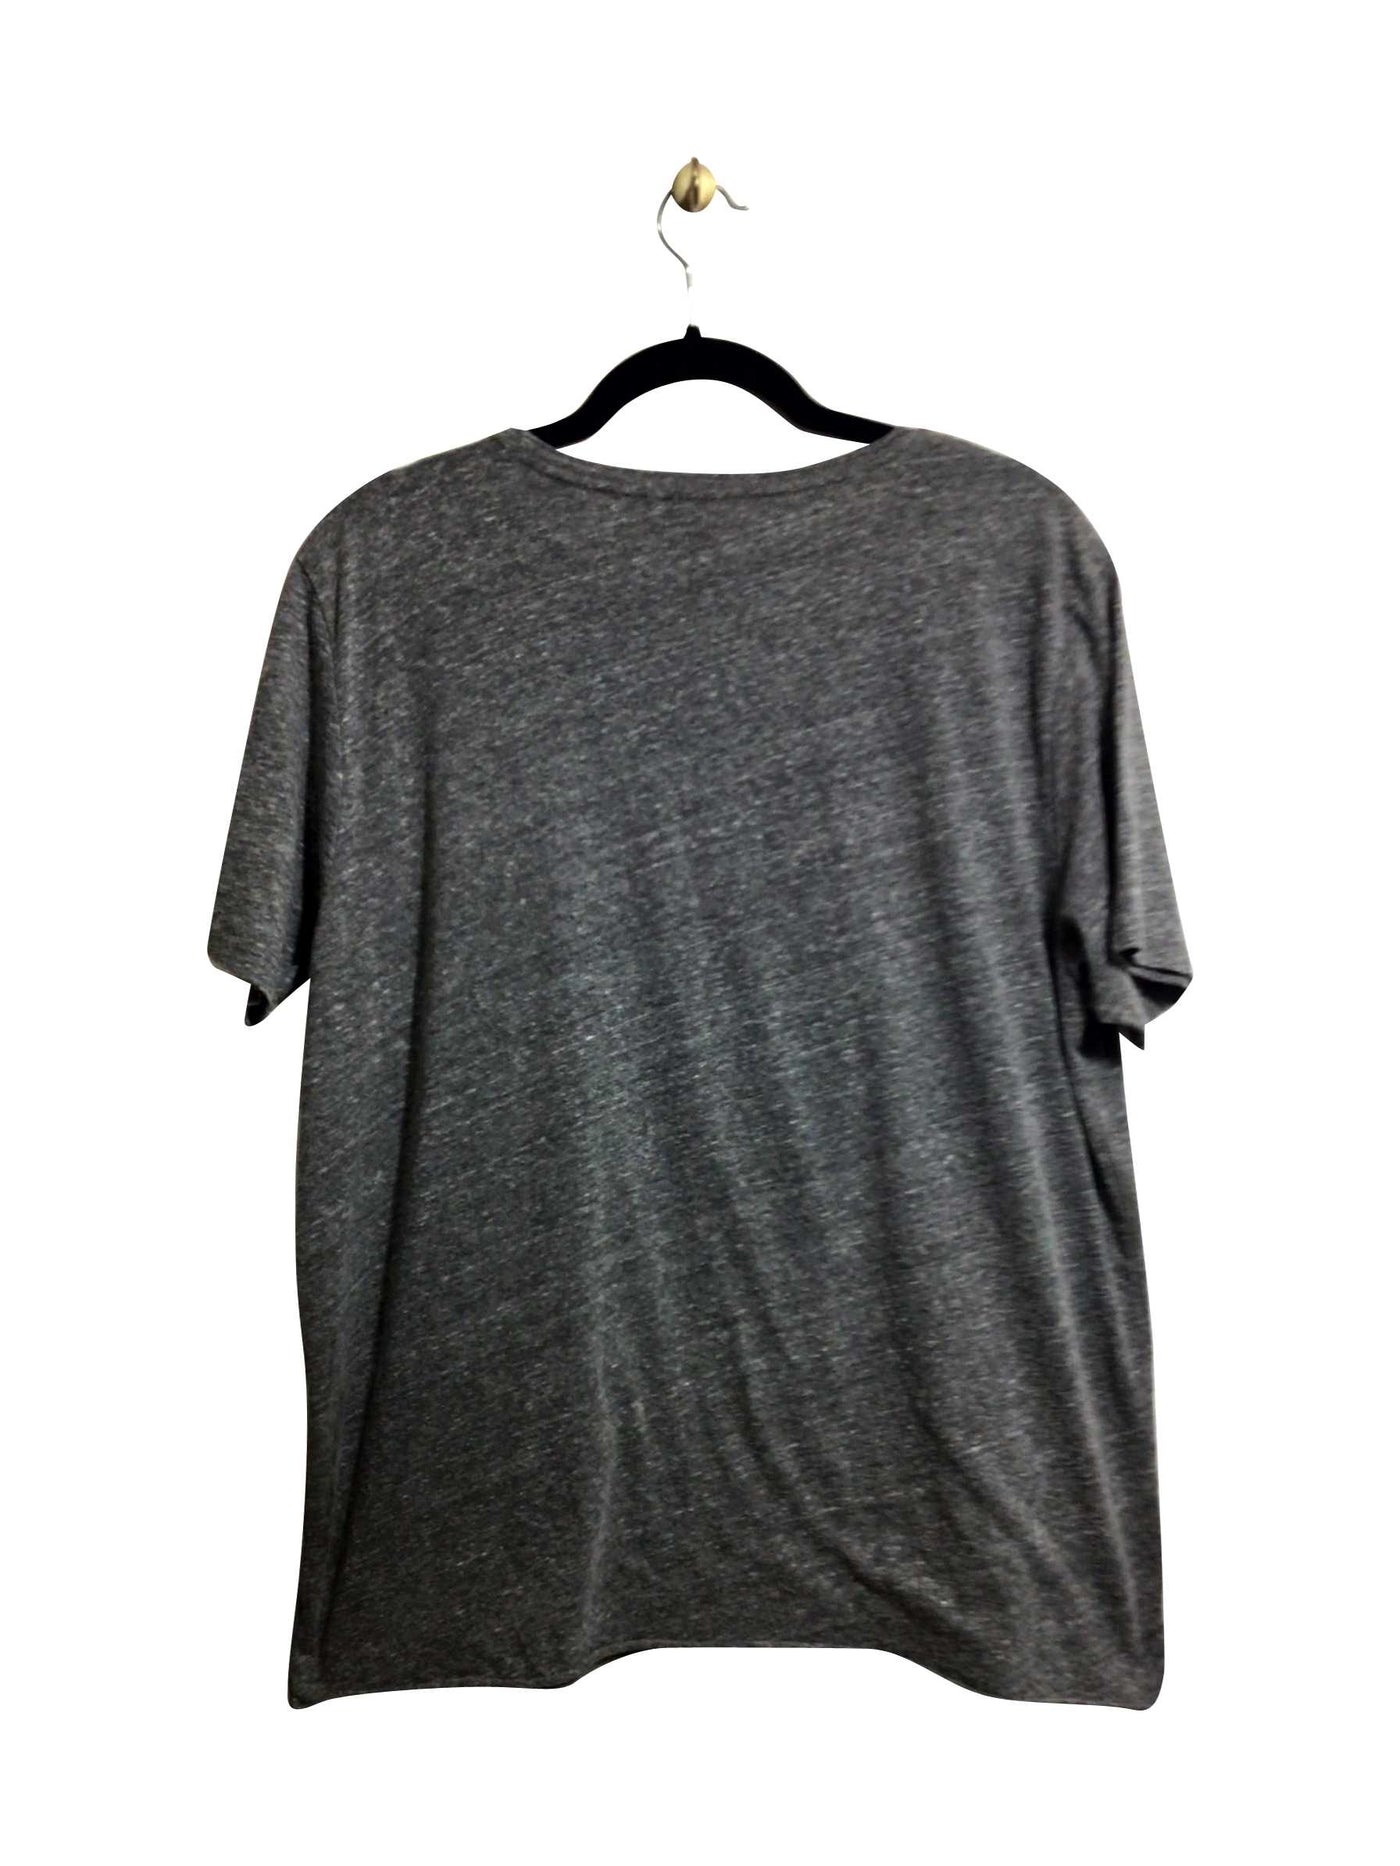 URBAN DECAY Regular fit T-shirt in Gray - Size XL | 15 $ KOOP